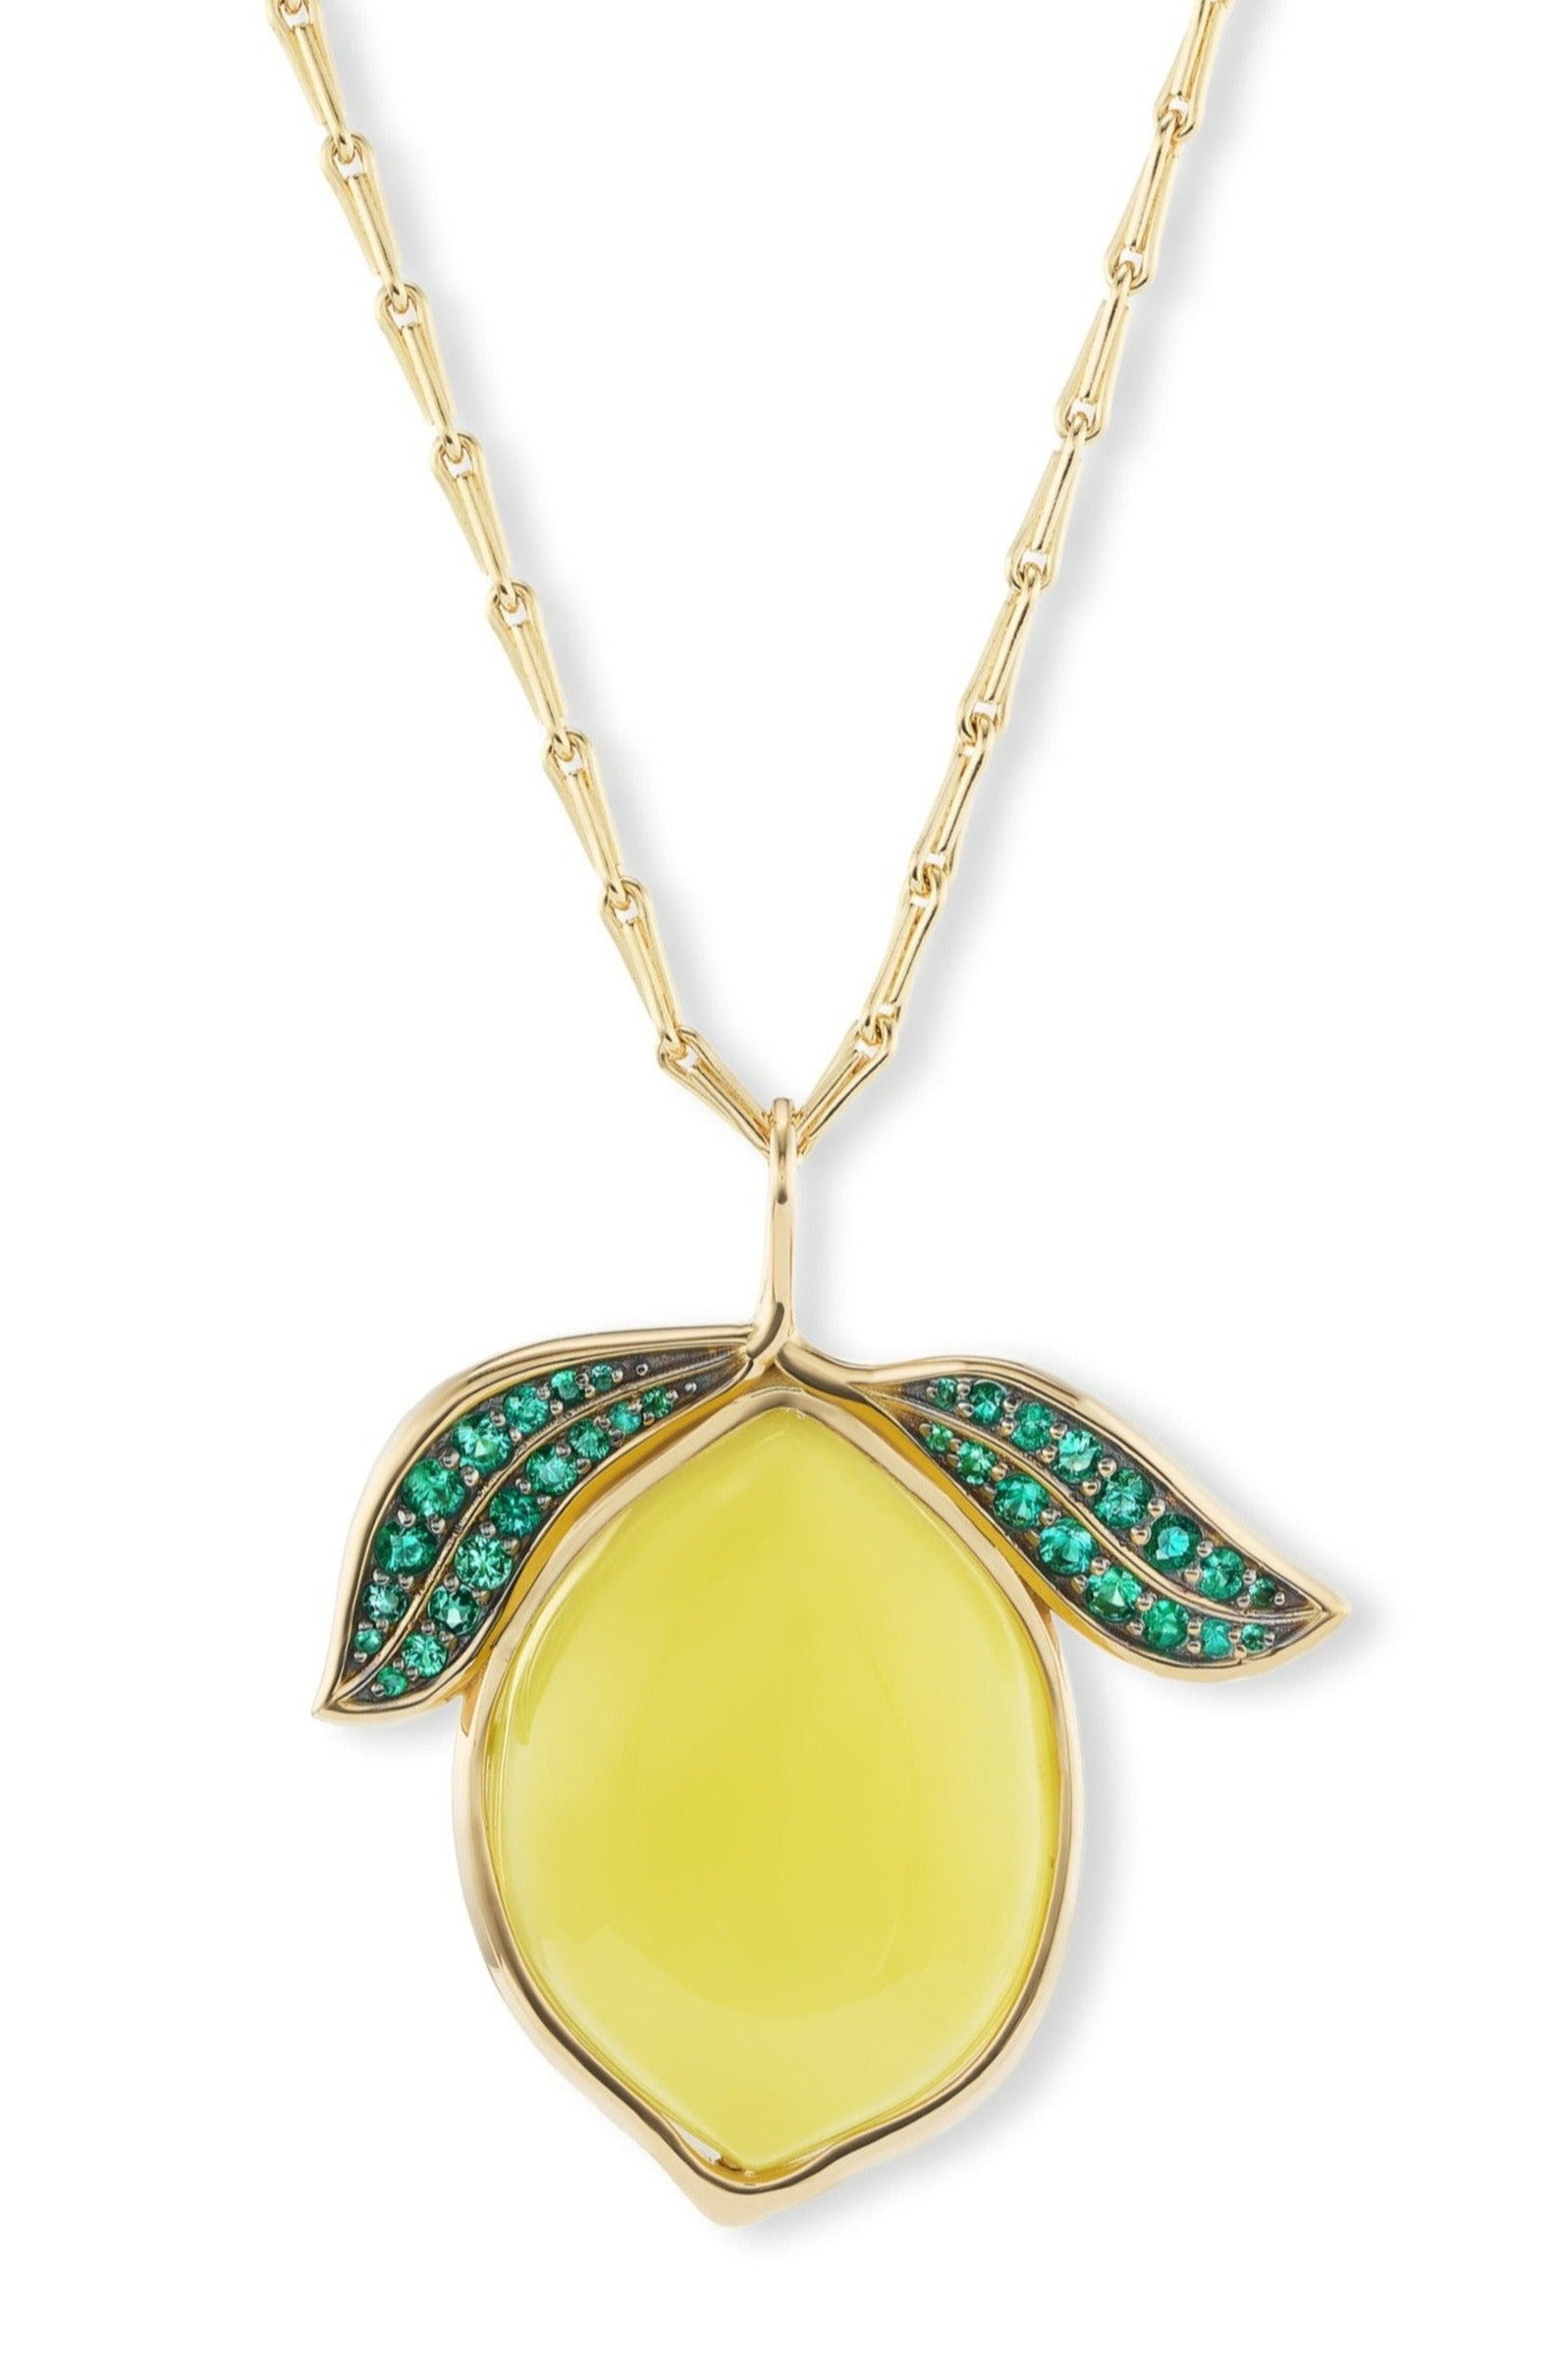 BRENT NEALE-Large Lemon Pendant Necklace-YELLOW GOLD